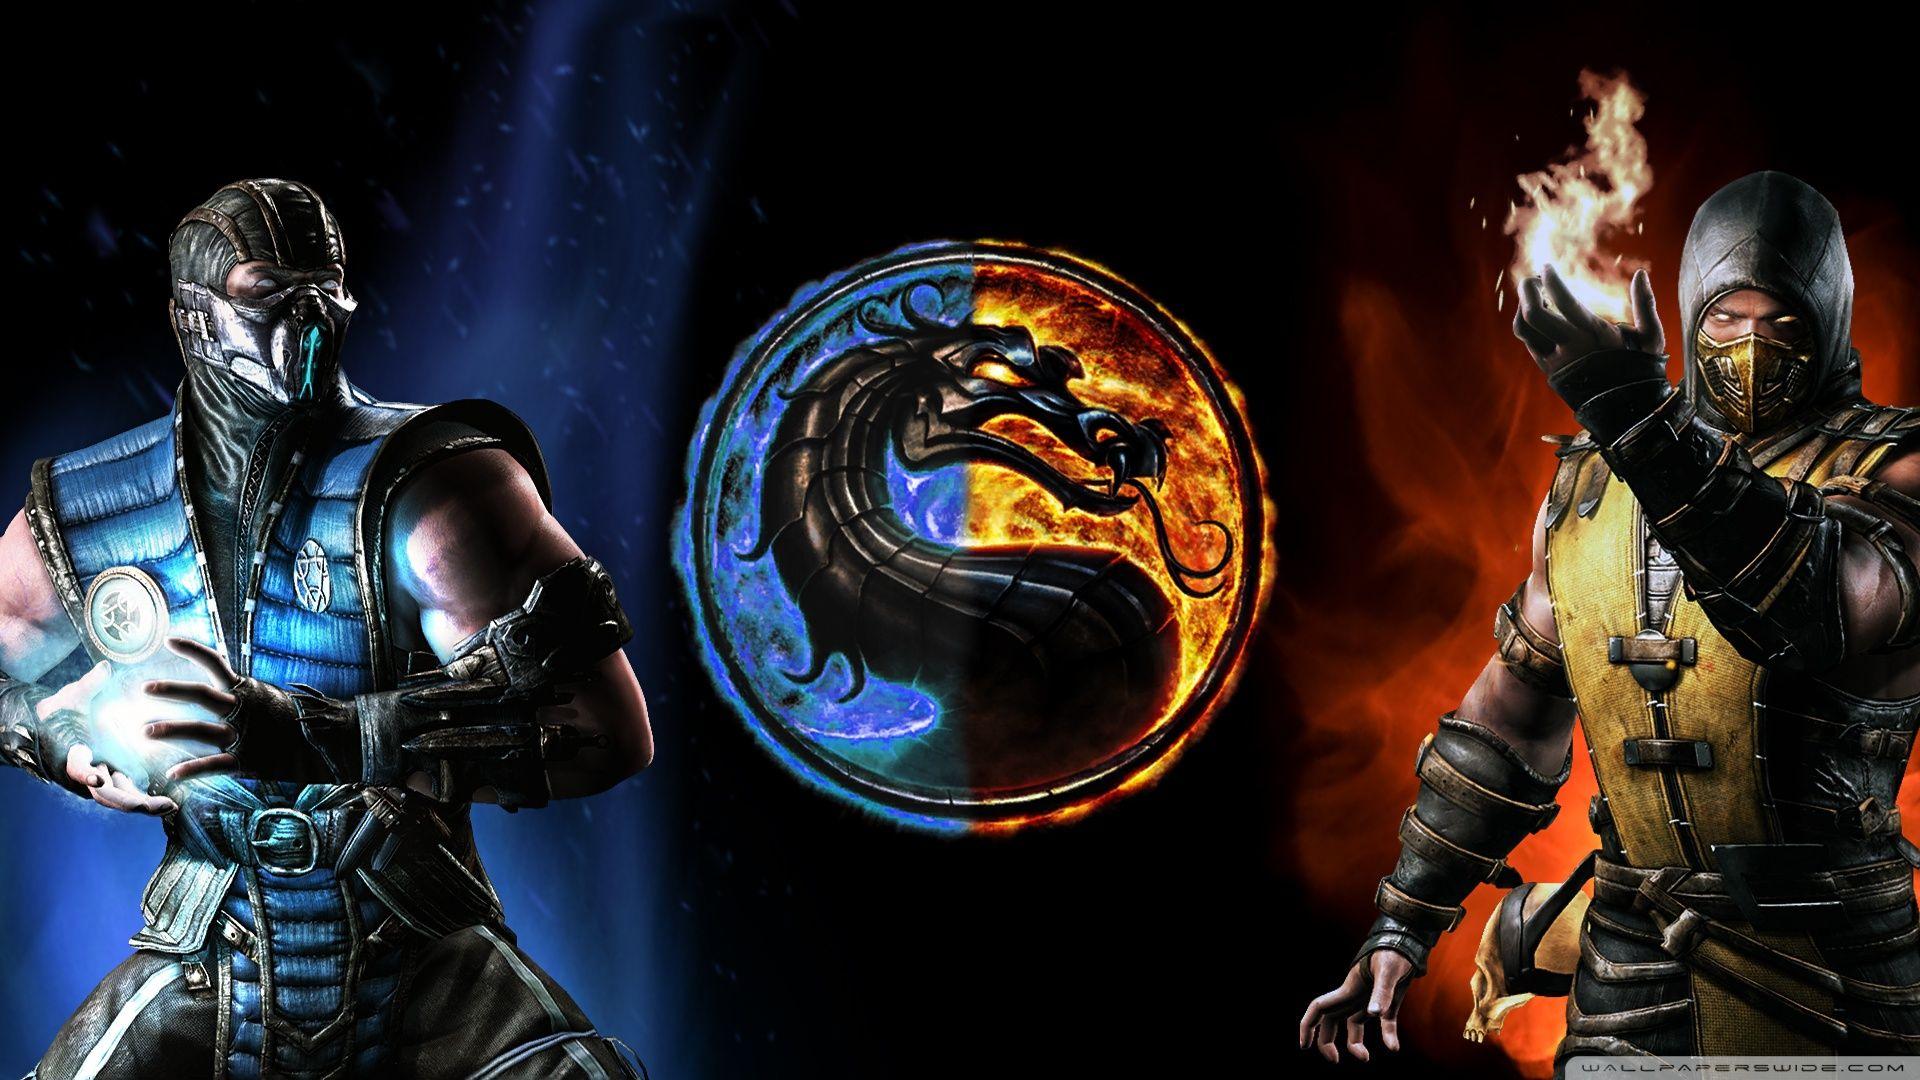 Mortal Kombat Scorpion Wallpapers Top Free Mortal Kombat Scorpion